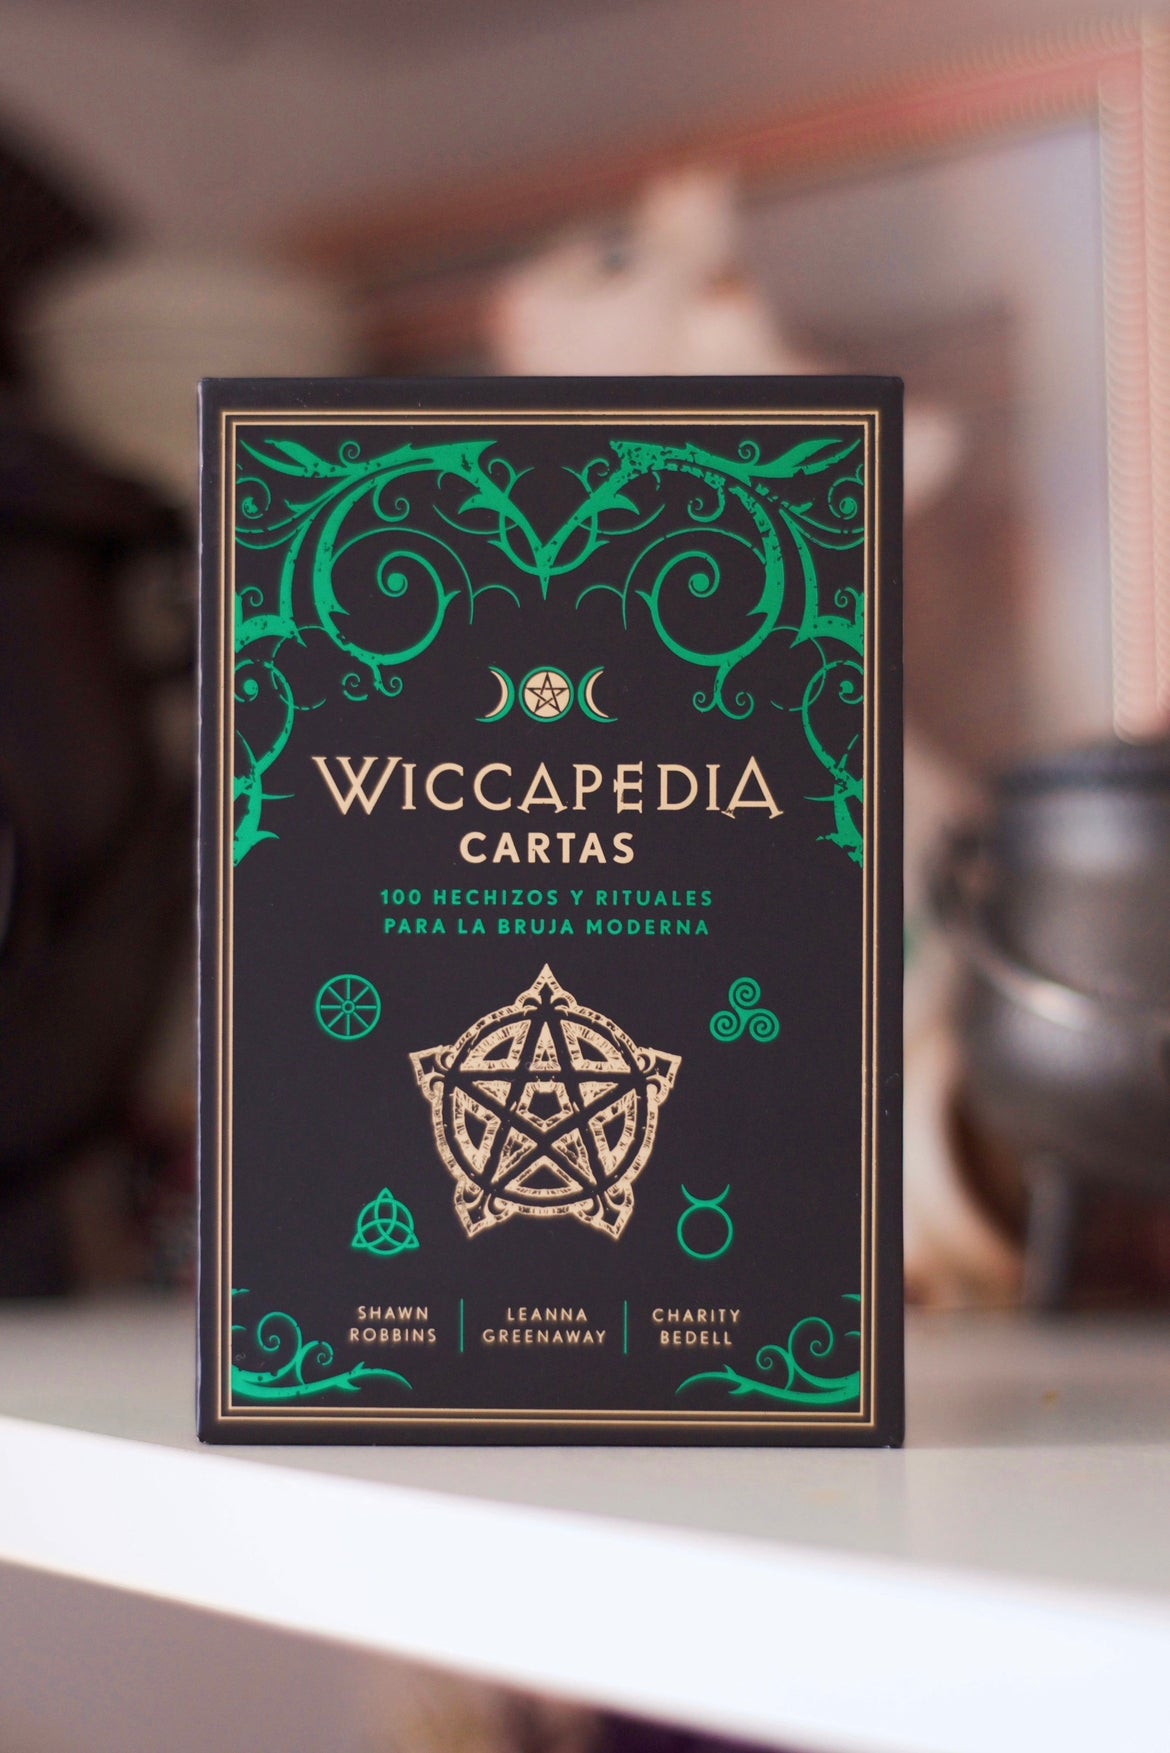 Wiccapedia cartas